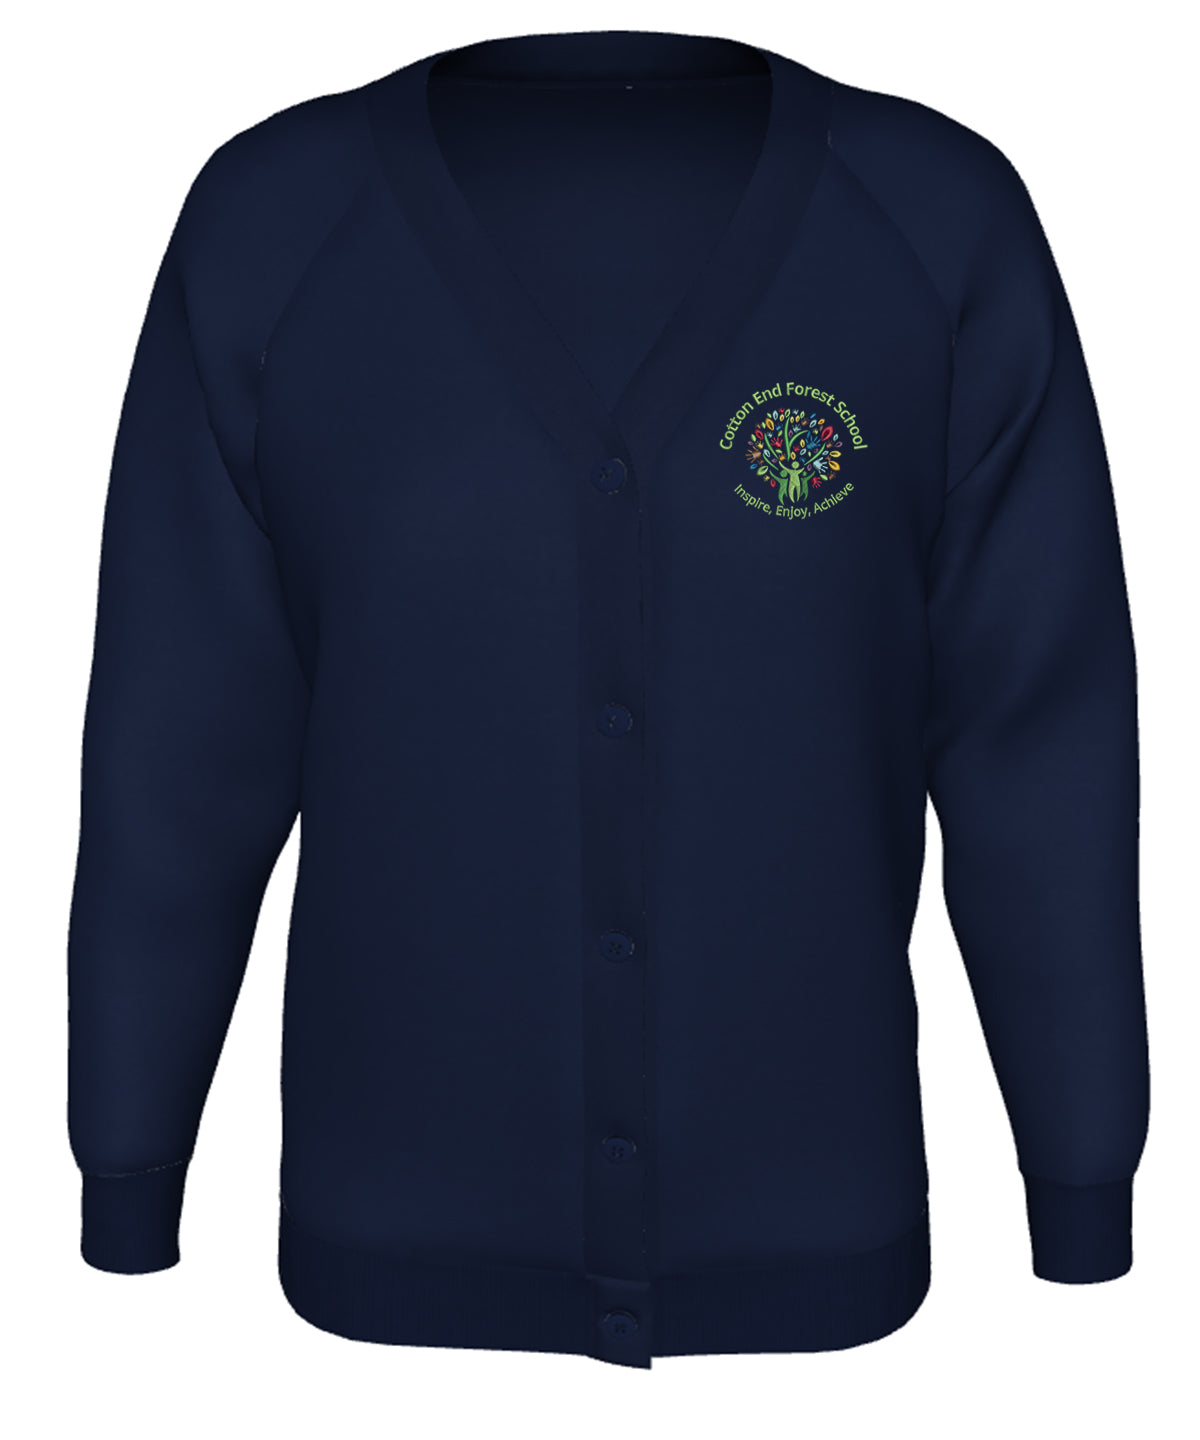 Cotton End Forest School - Sweat Cardigan - School Uniform Shop